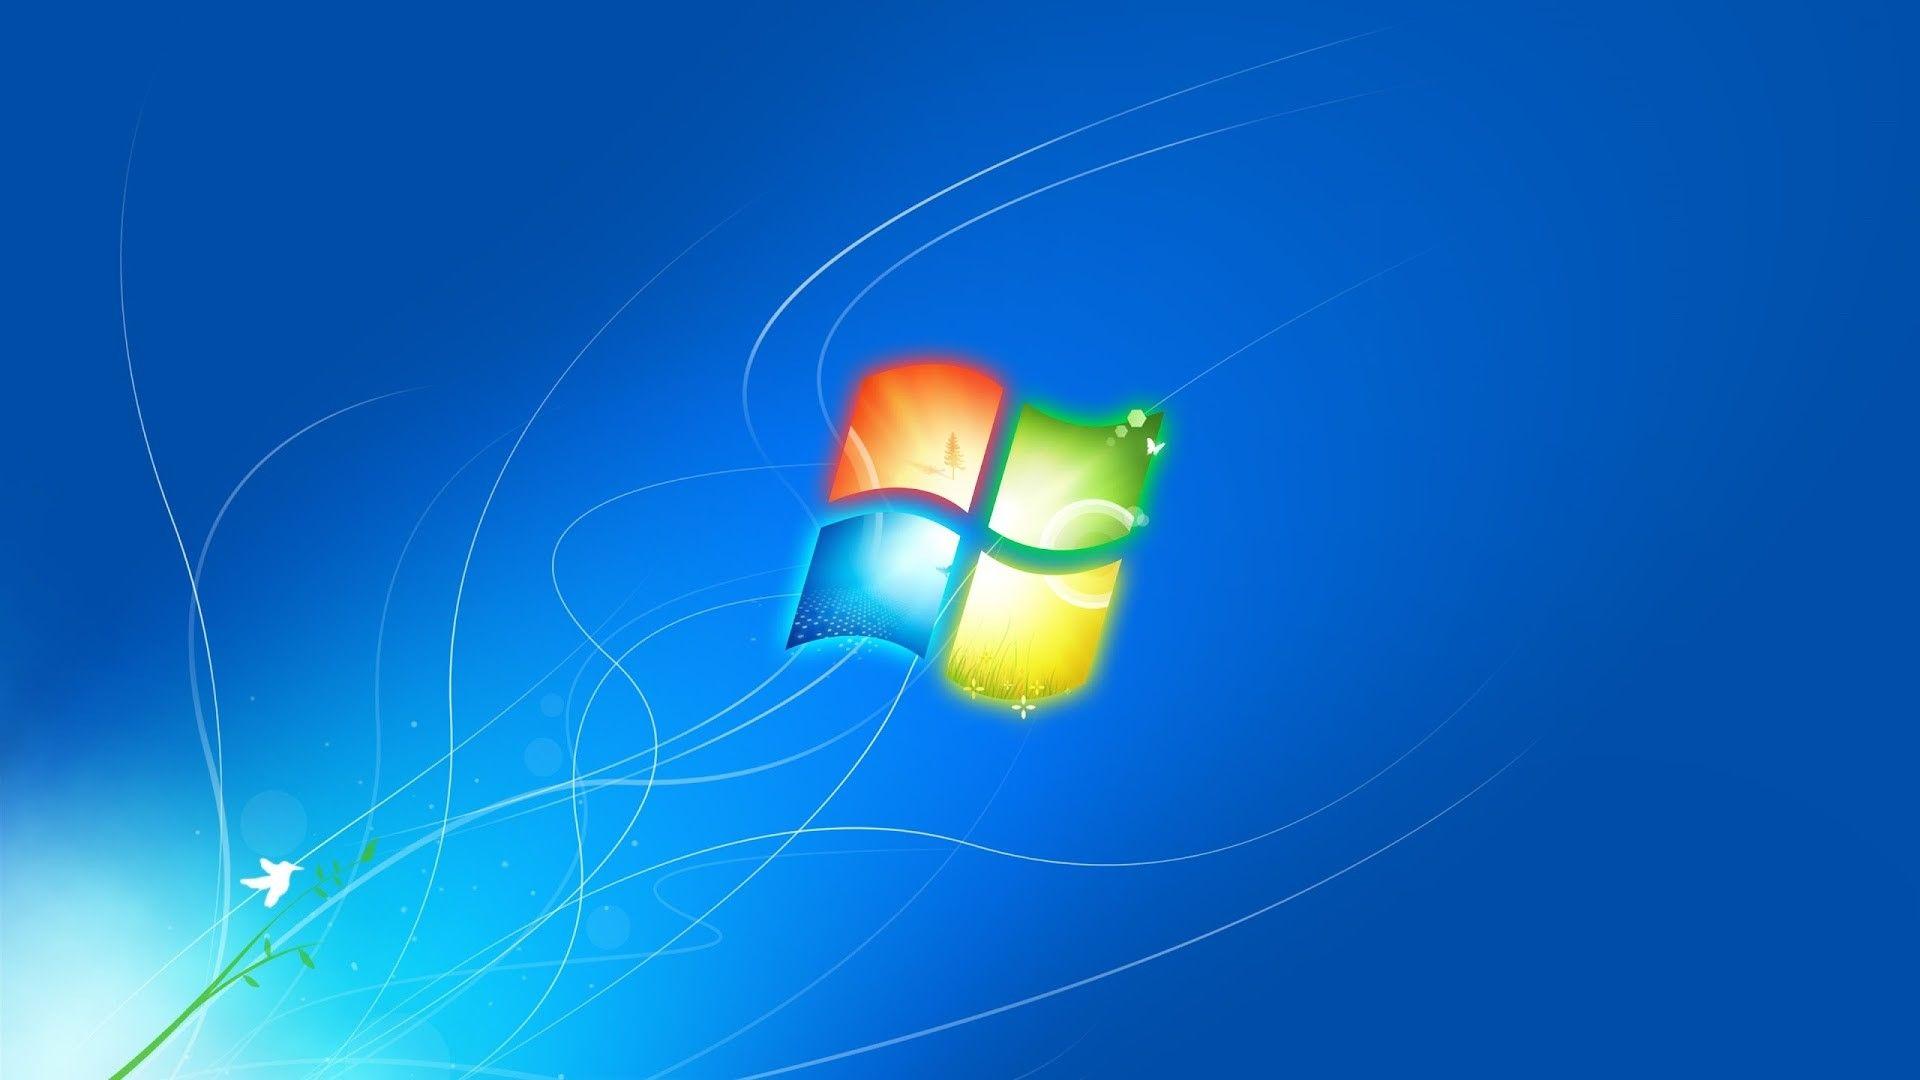 Windows 7 4k Wallpapers - Top Free ...